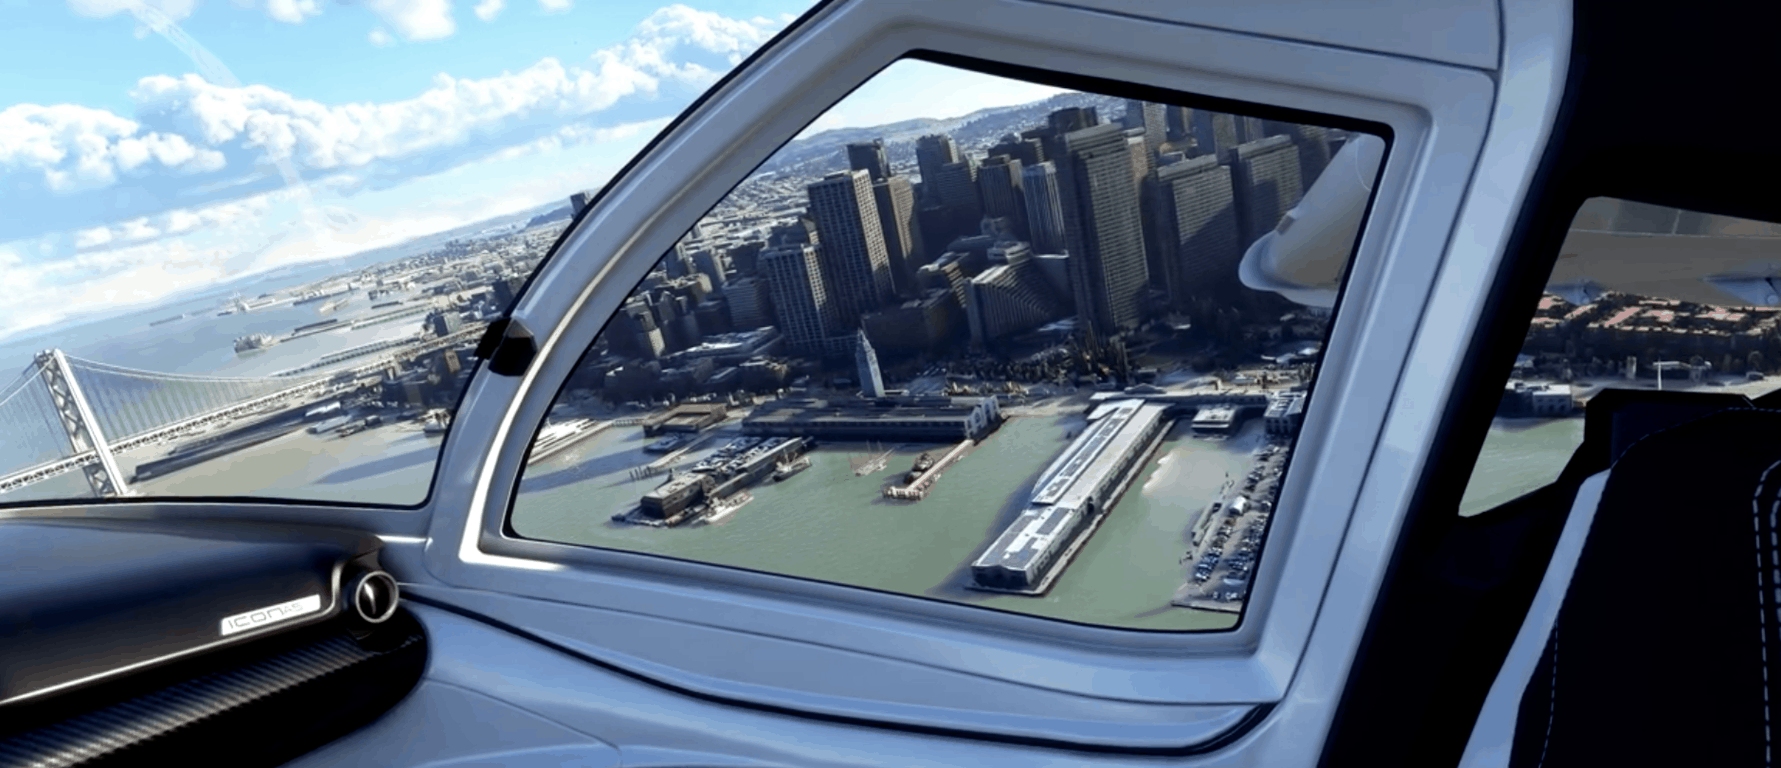 microsoft flight simulator 2019 windows 10